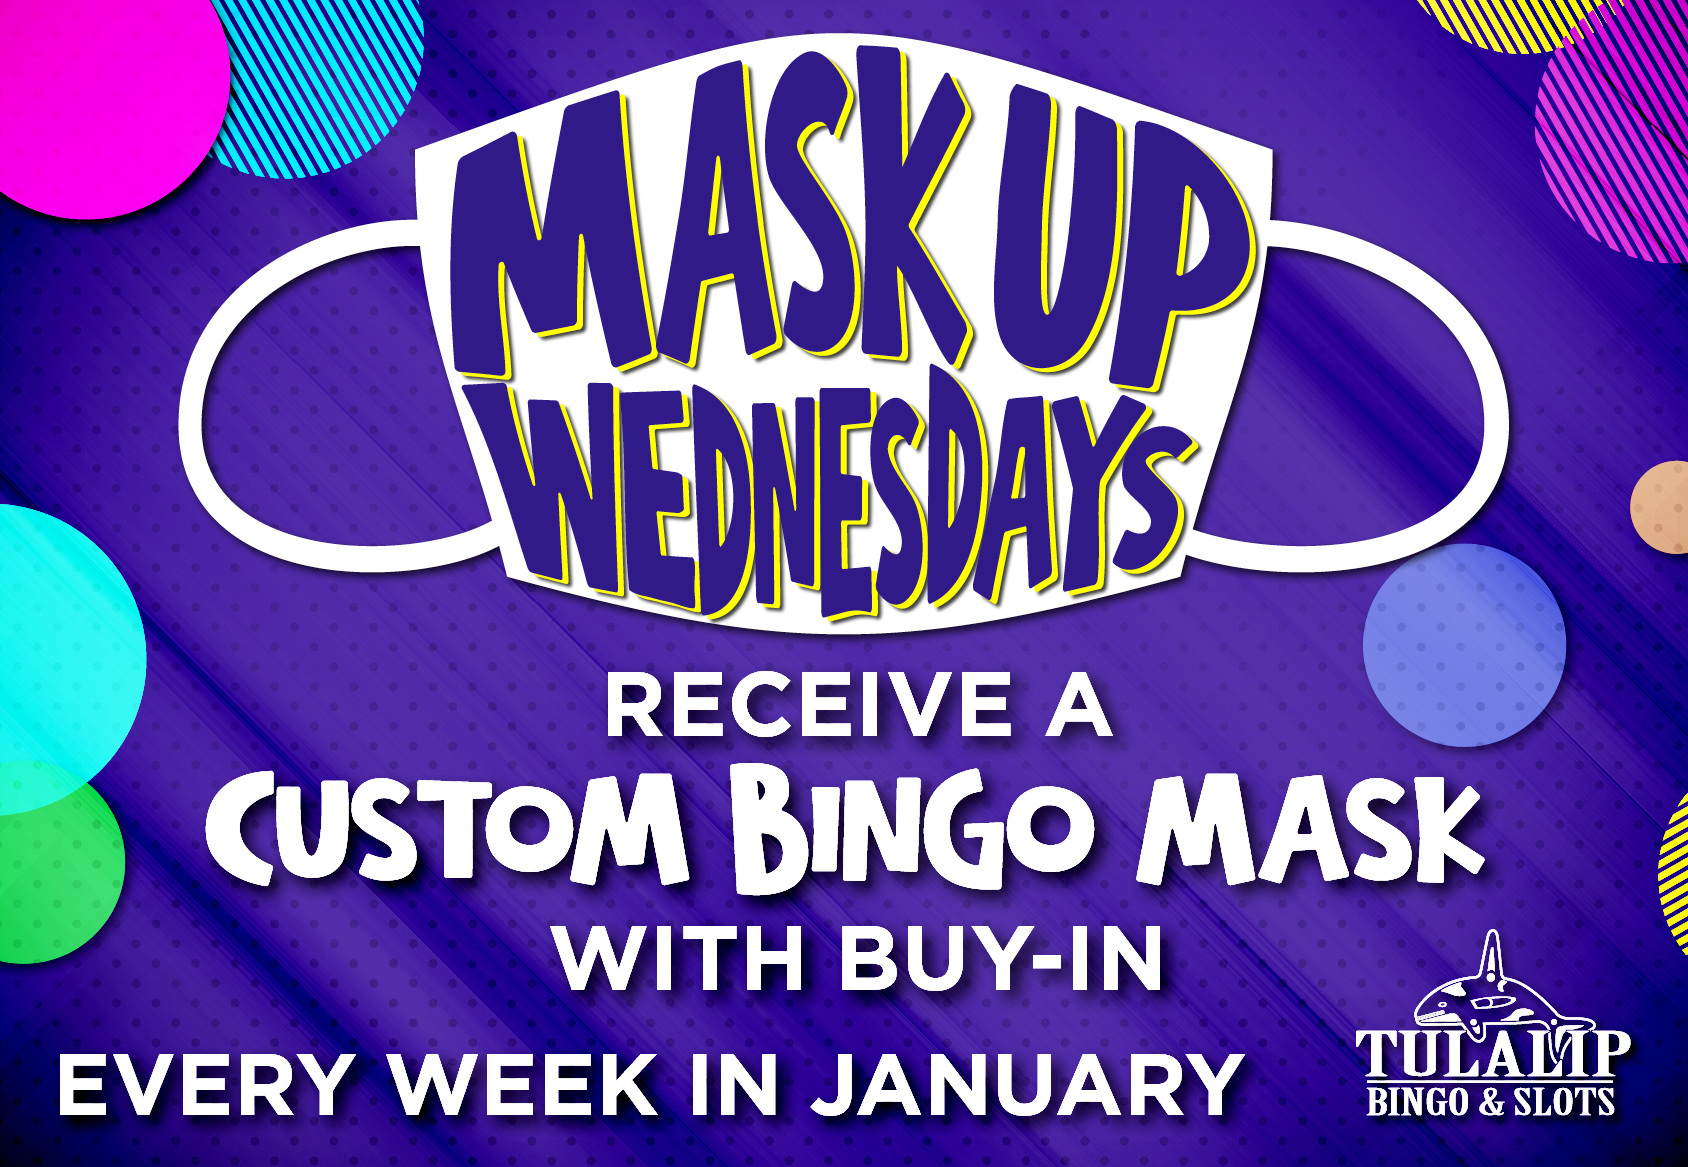 Tulalip Bingo "Mask Up" Wednesdays, receive a custom Bingo mask with buy-in every week in January 2022. 